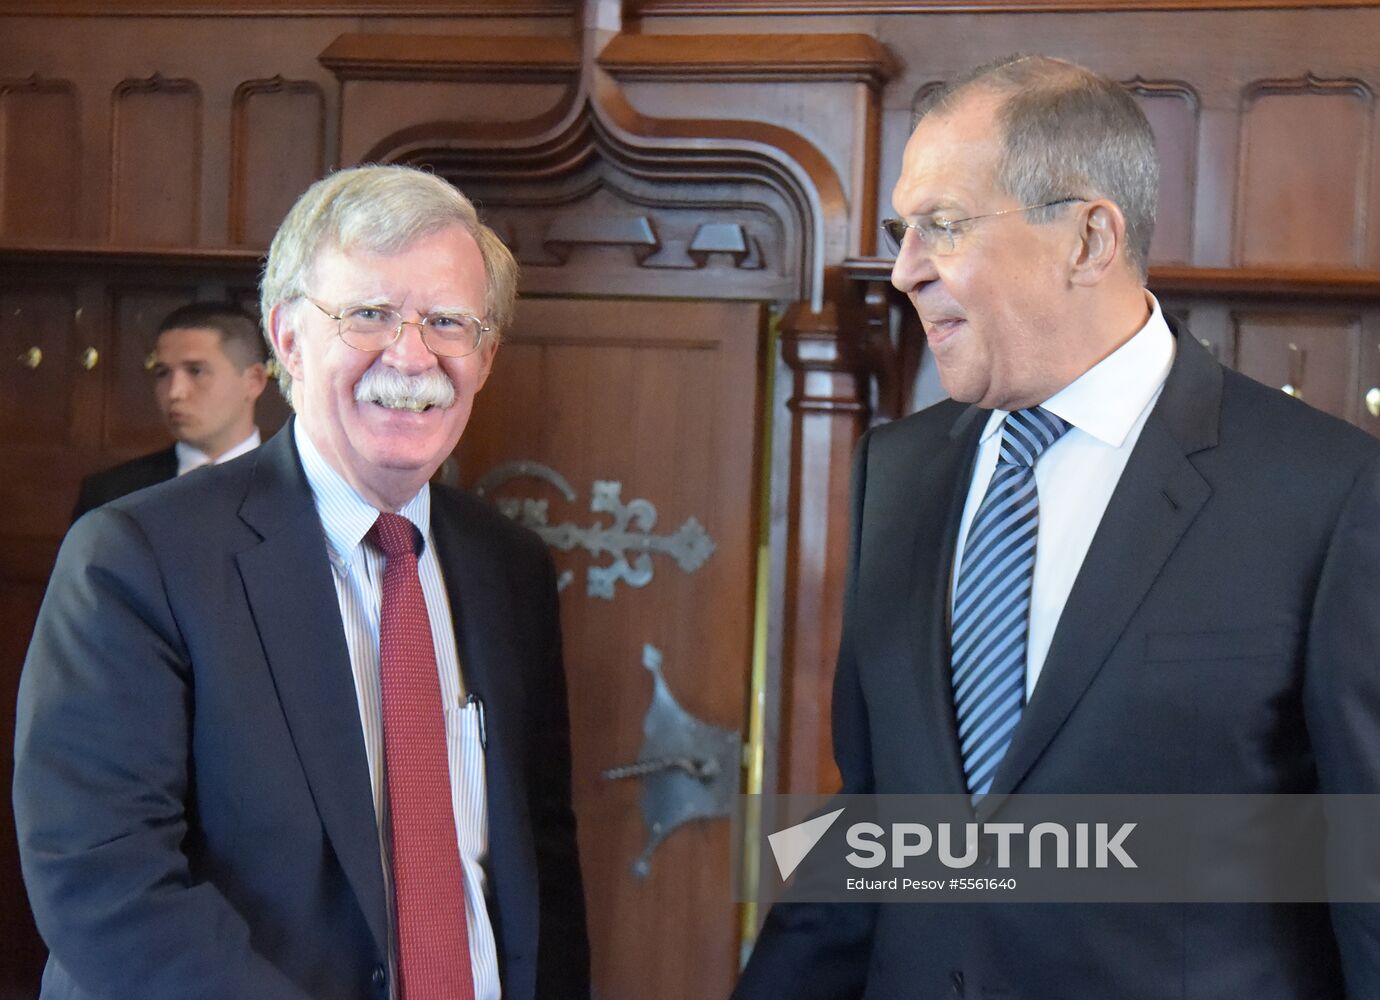 US National Security Advisor John Bolton visits Russia